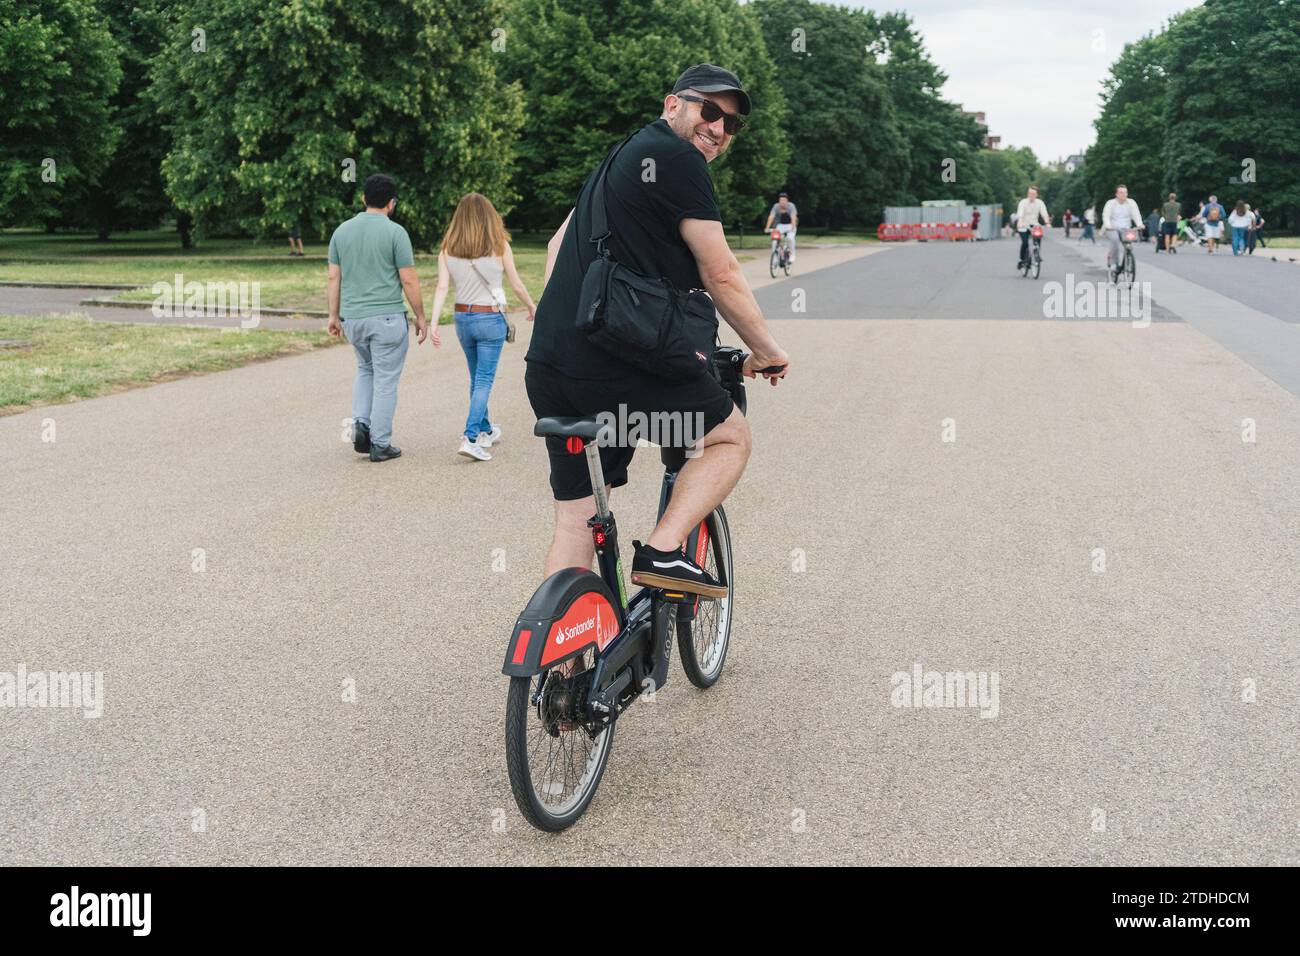 A man rides a hire / rental Santander eBike in London through a park Stock Photo